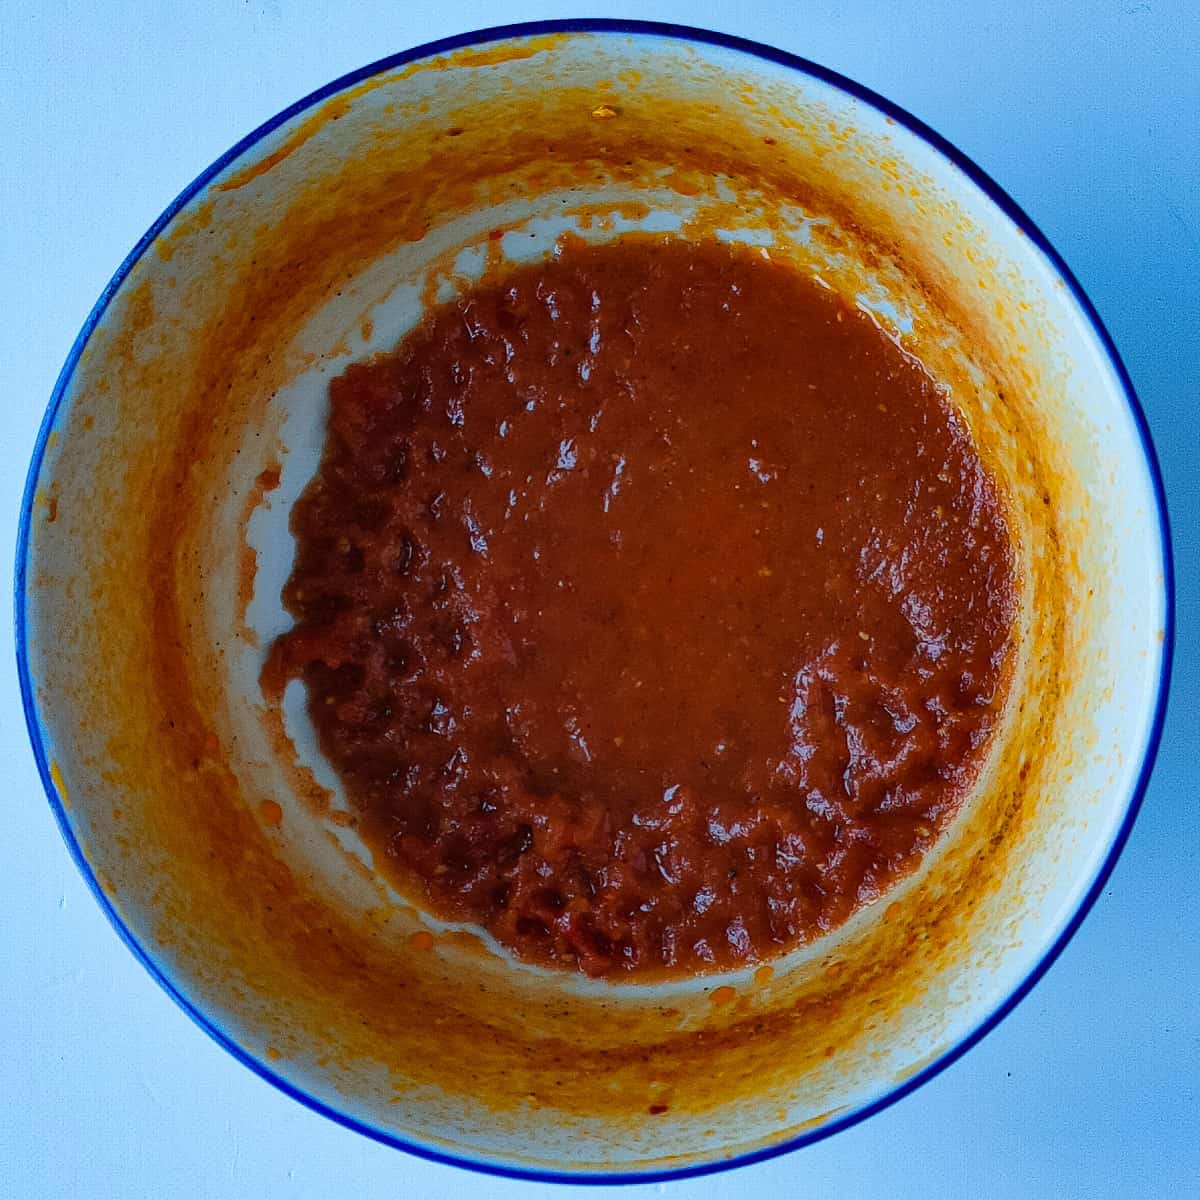 homemade tomato paste (spaghetti sauce secret ingredient) in a white bowl.